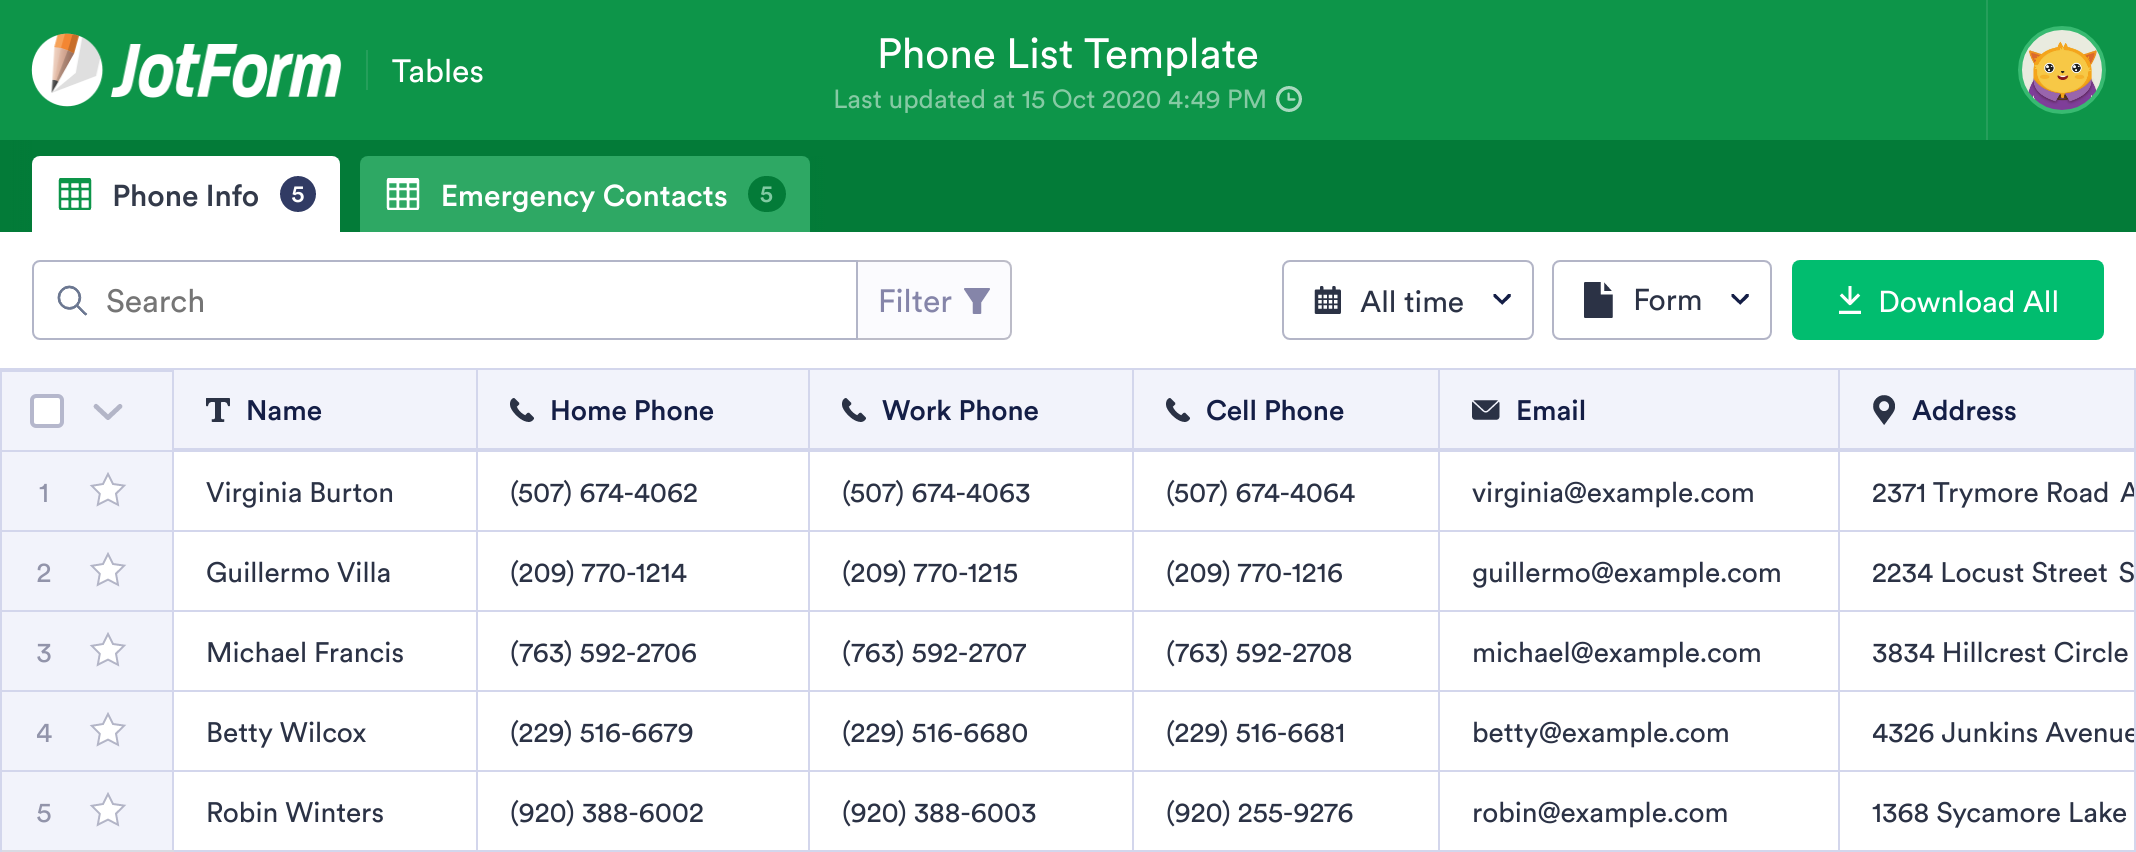 Phone List Template JotForm Tables